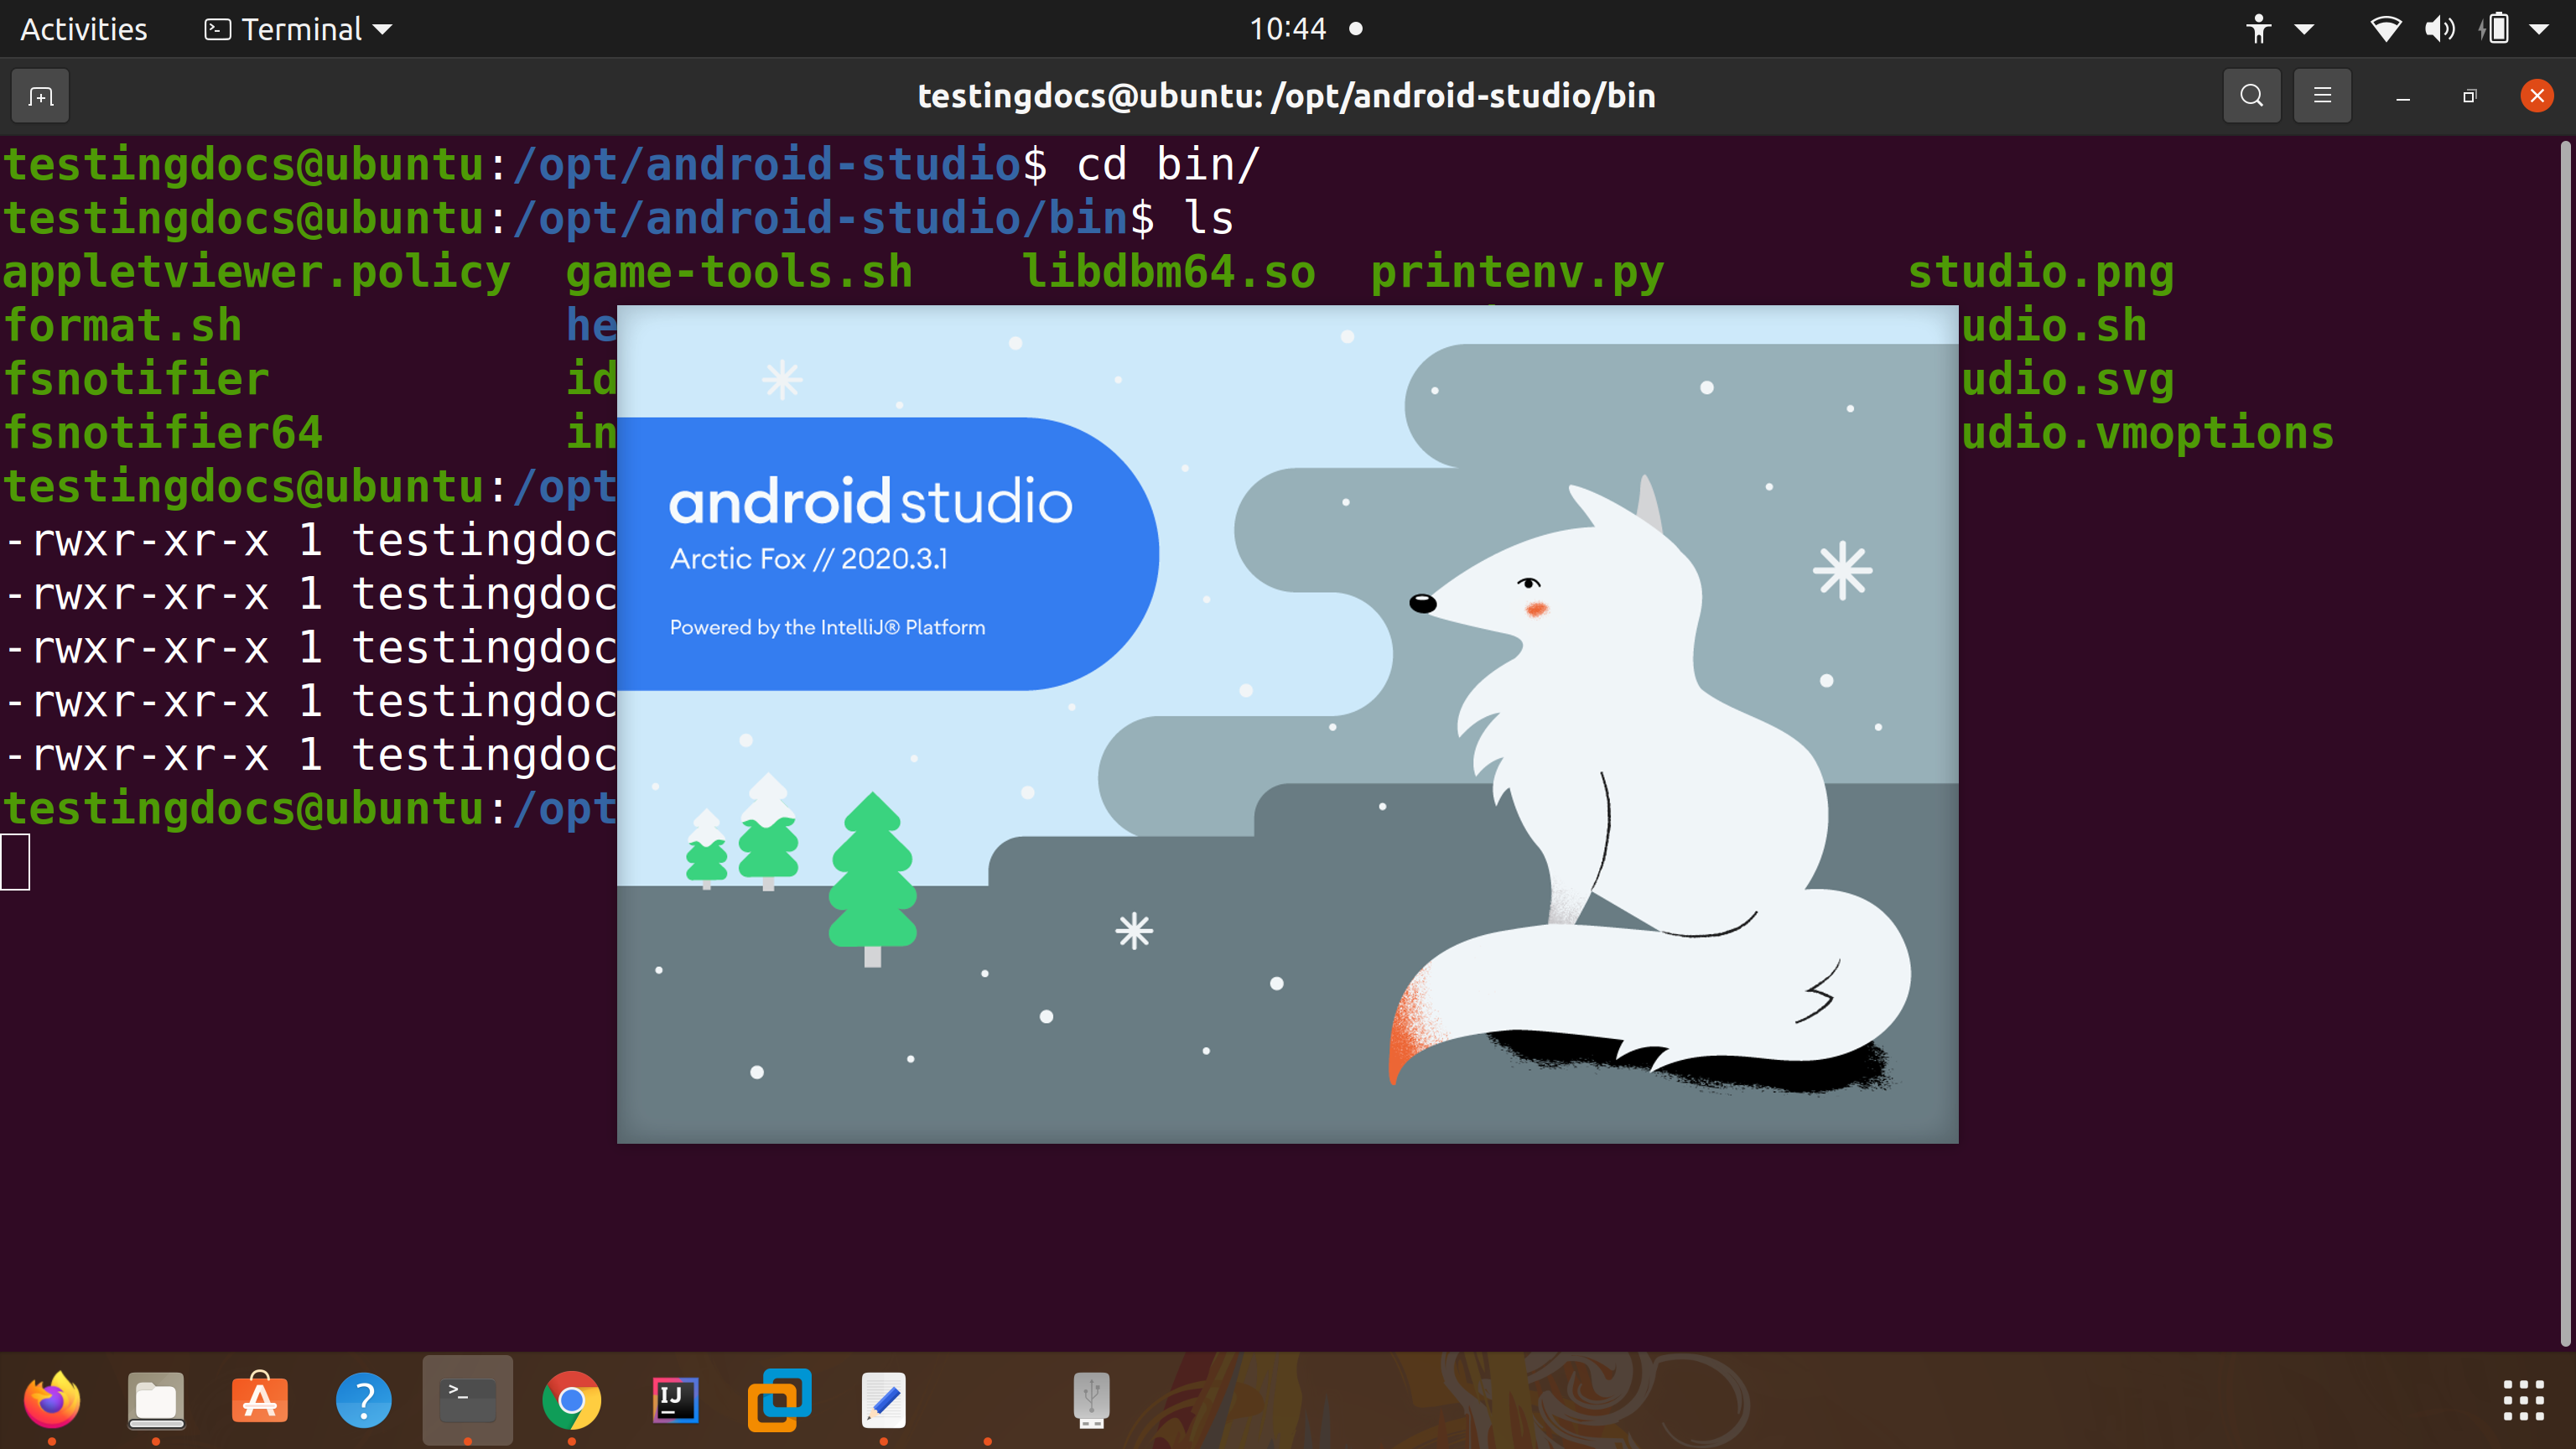 Android Studio Setup Wizard